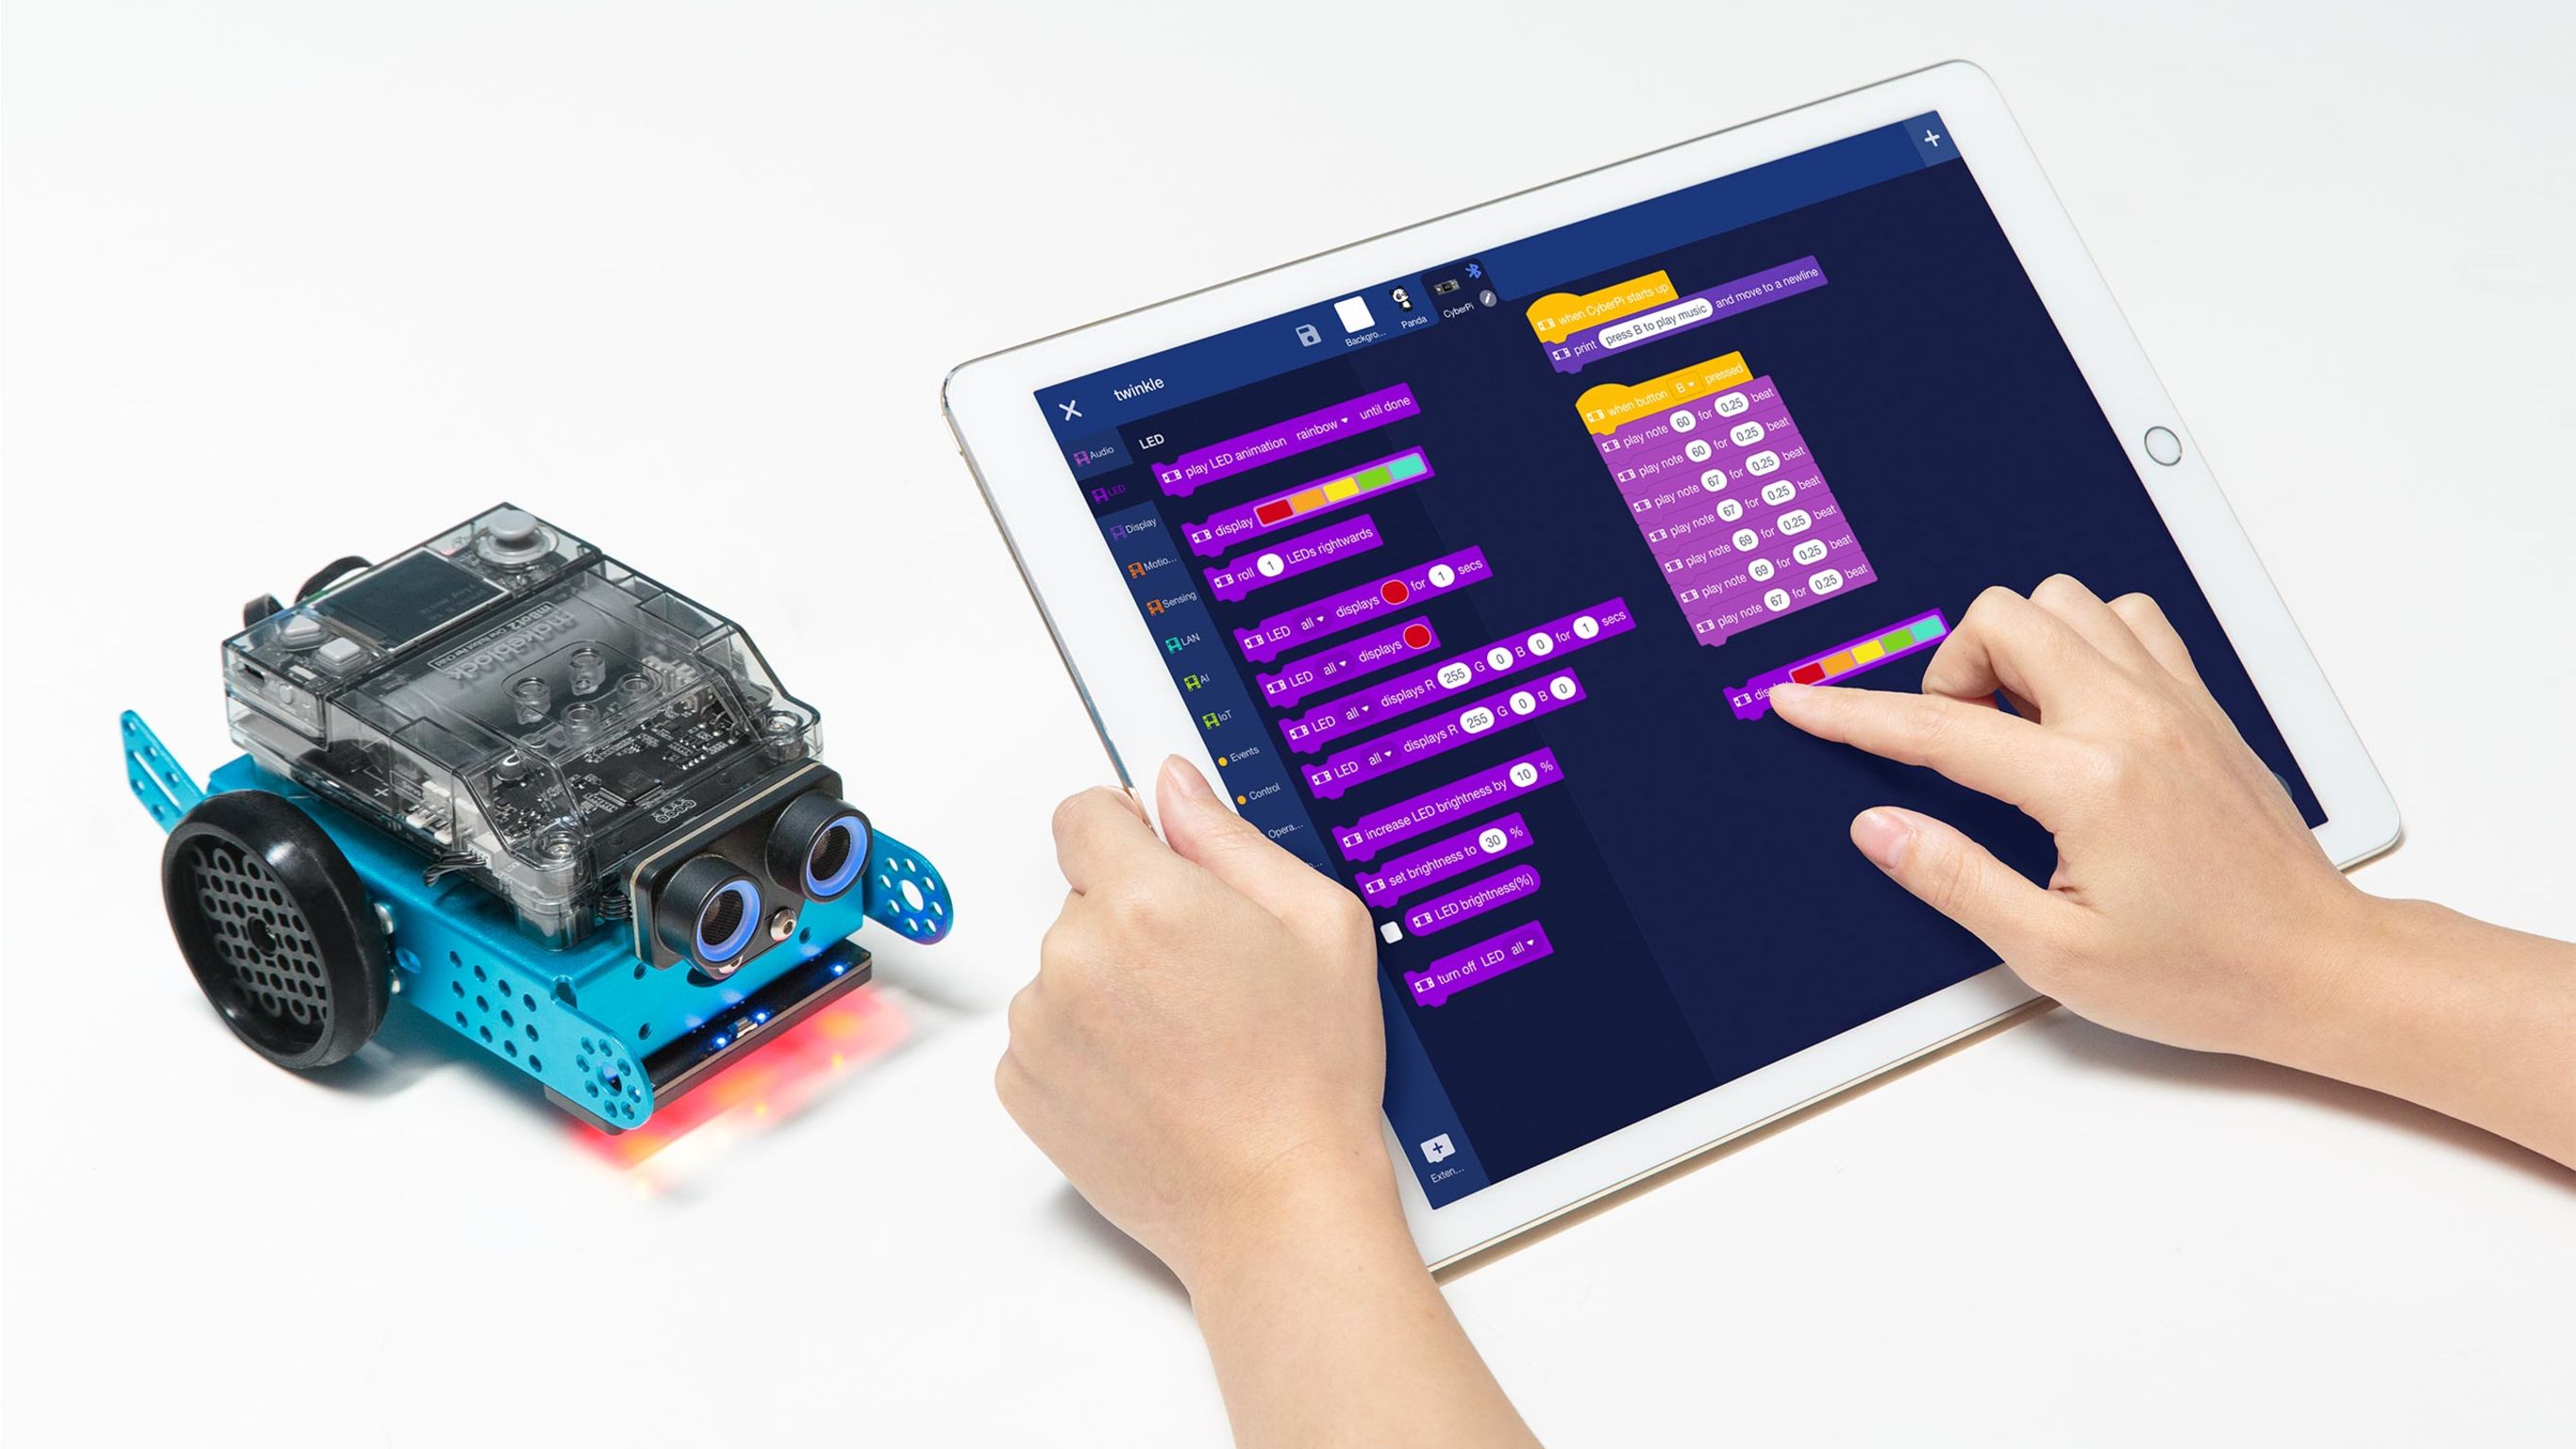 mBot2 - STEM Educational Programmable Robot Kit